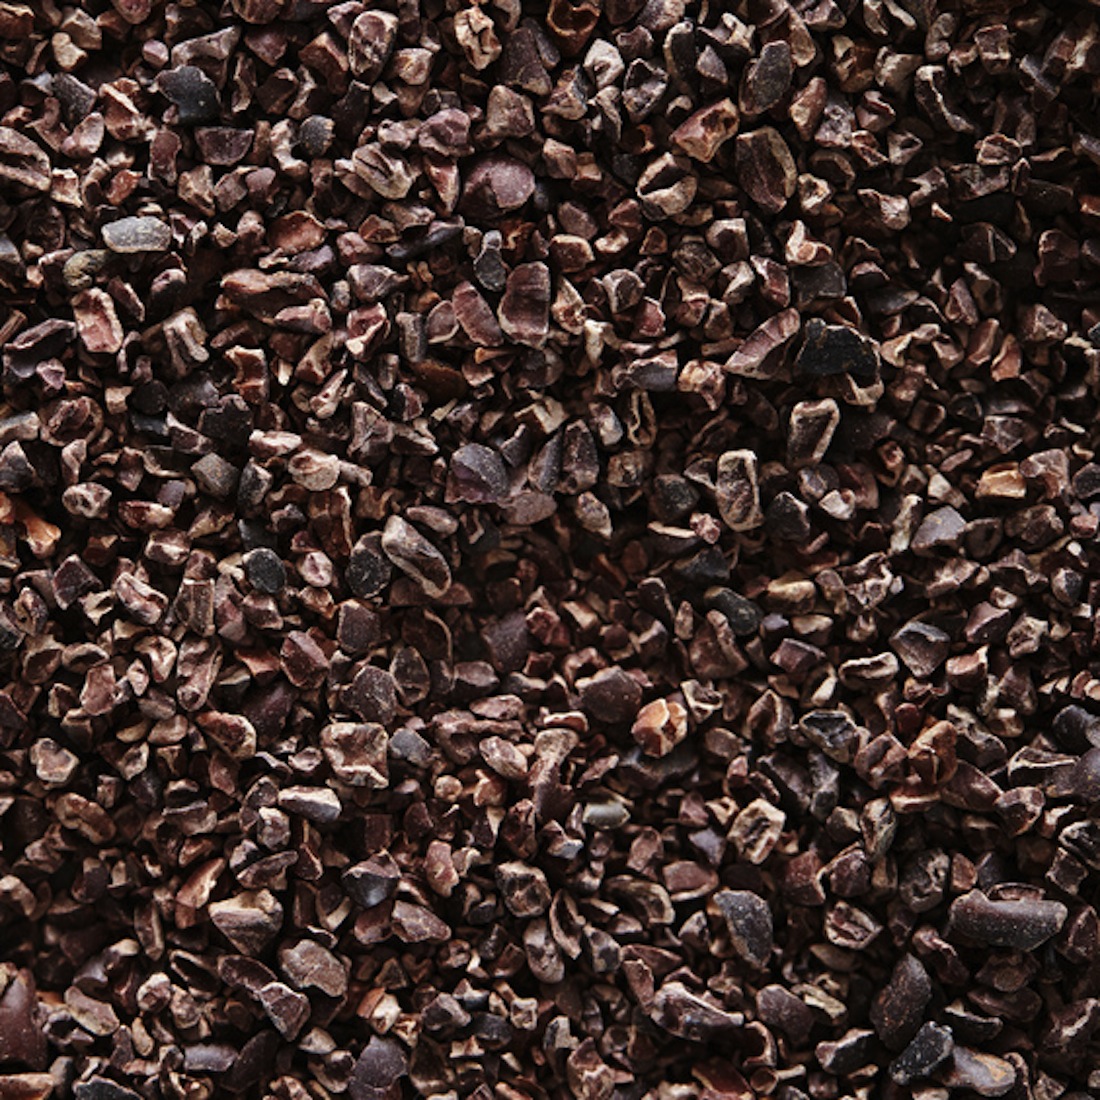 anker storm serie Cacao nibs kopen? 100% raw! - Bas Boer Noten